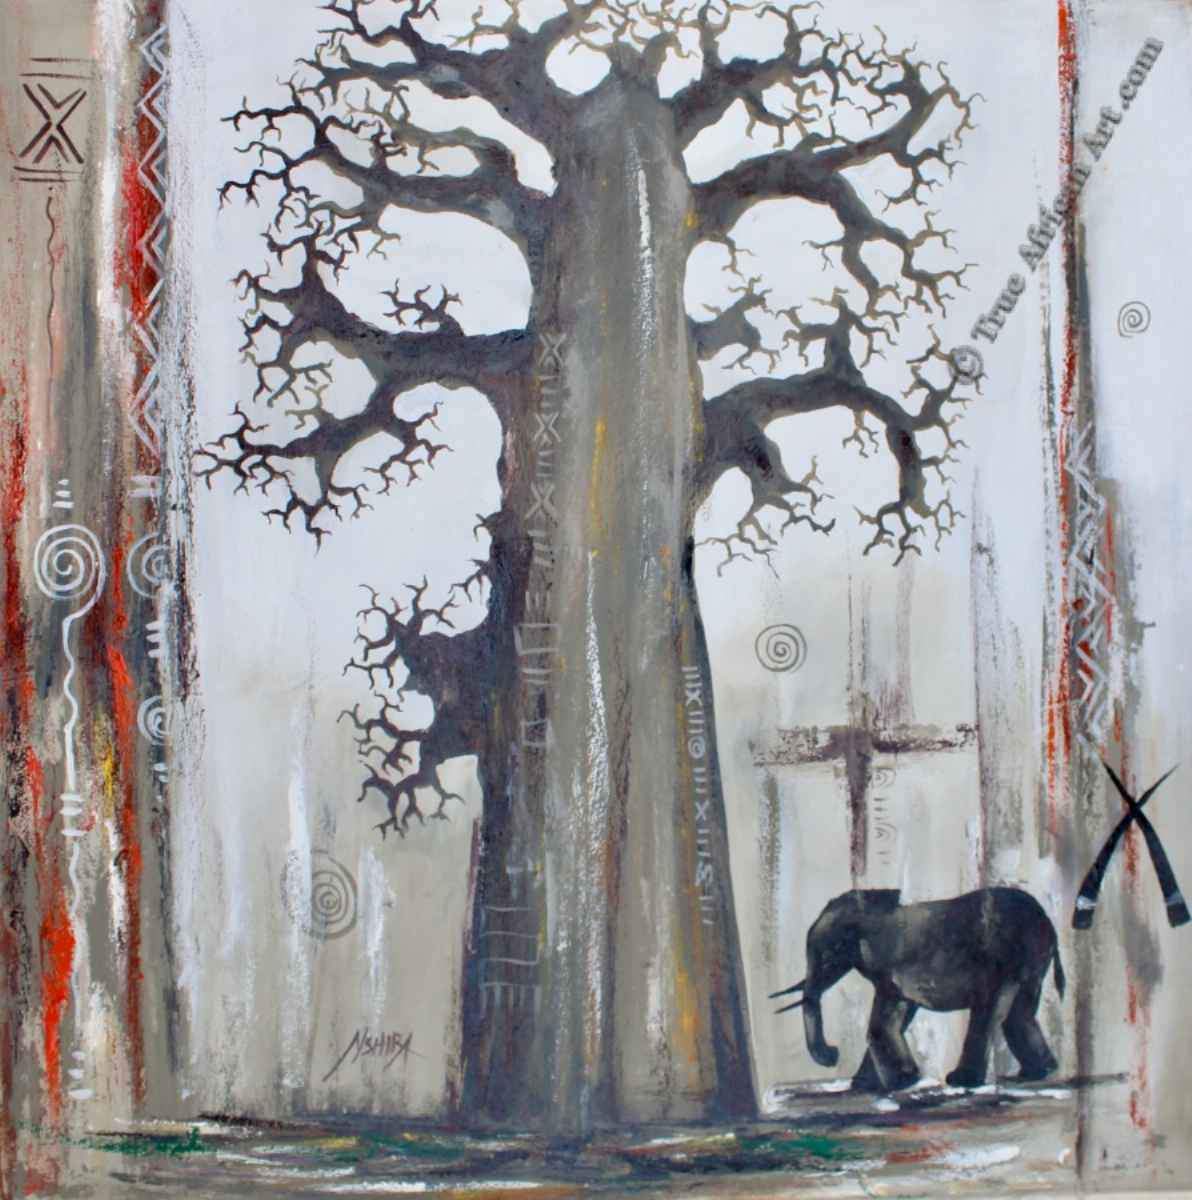 Daniel Akortia  |  Ghana  |  "A Baobab Tree for a Baby Elephant"  |  True African Art .com